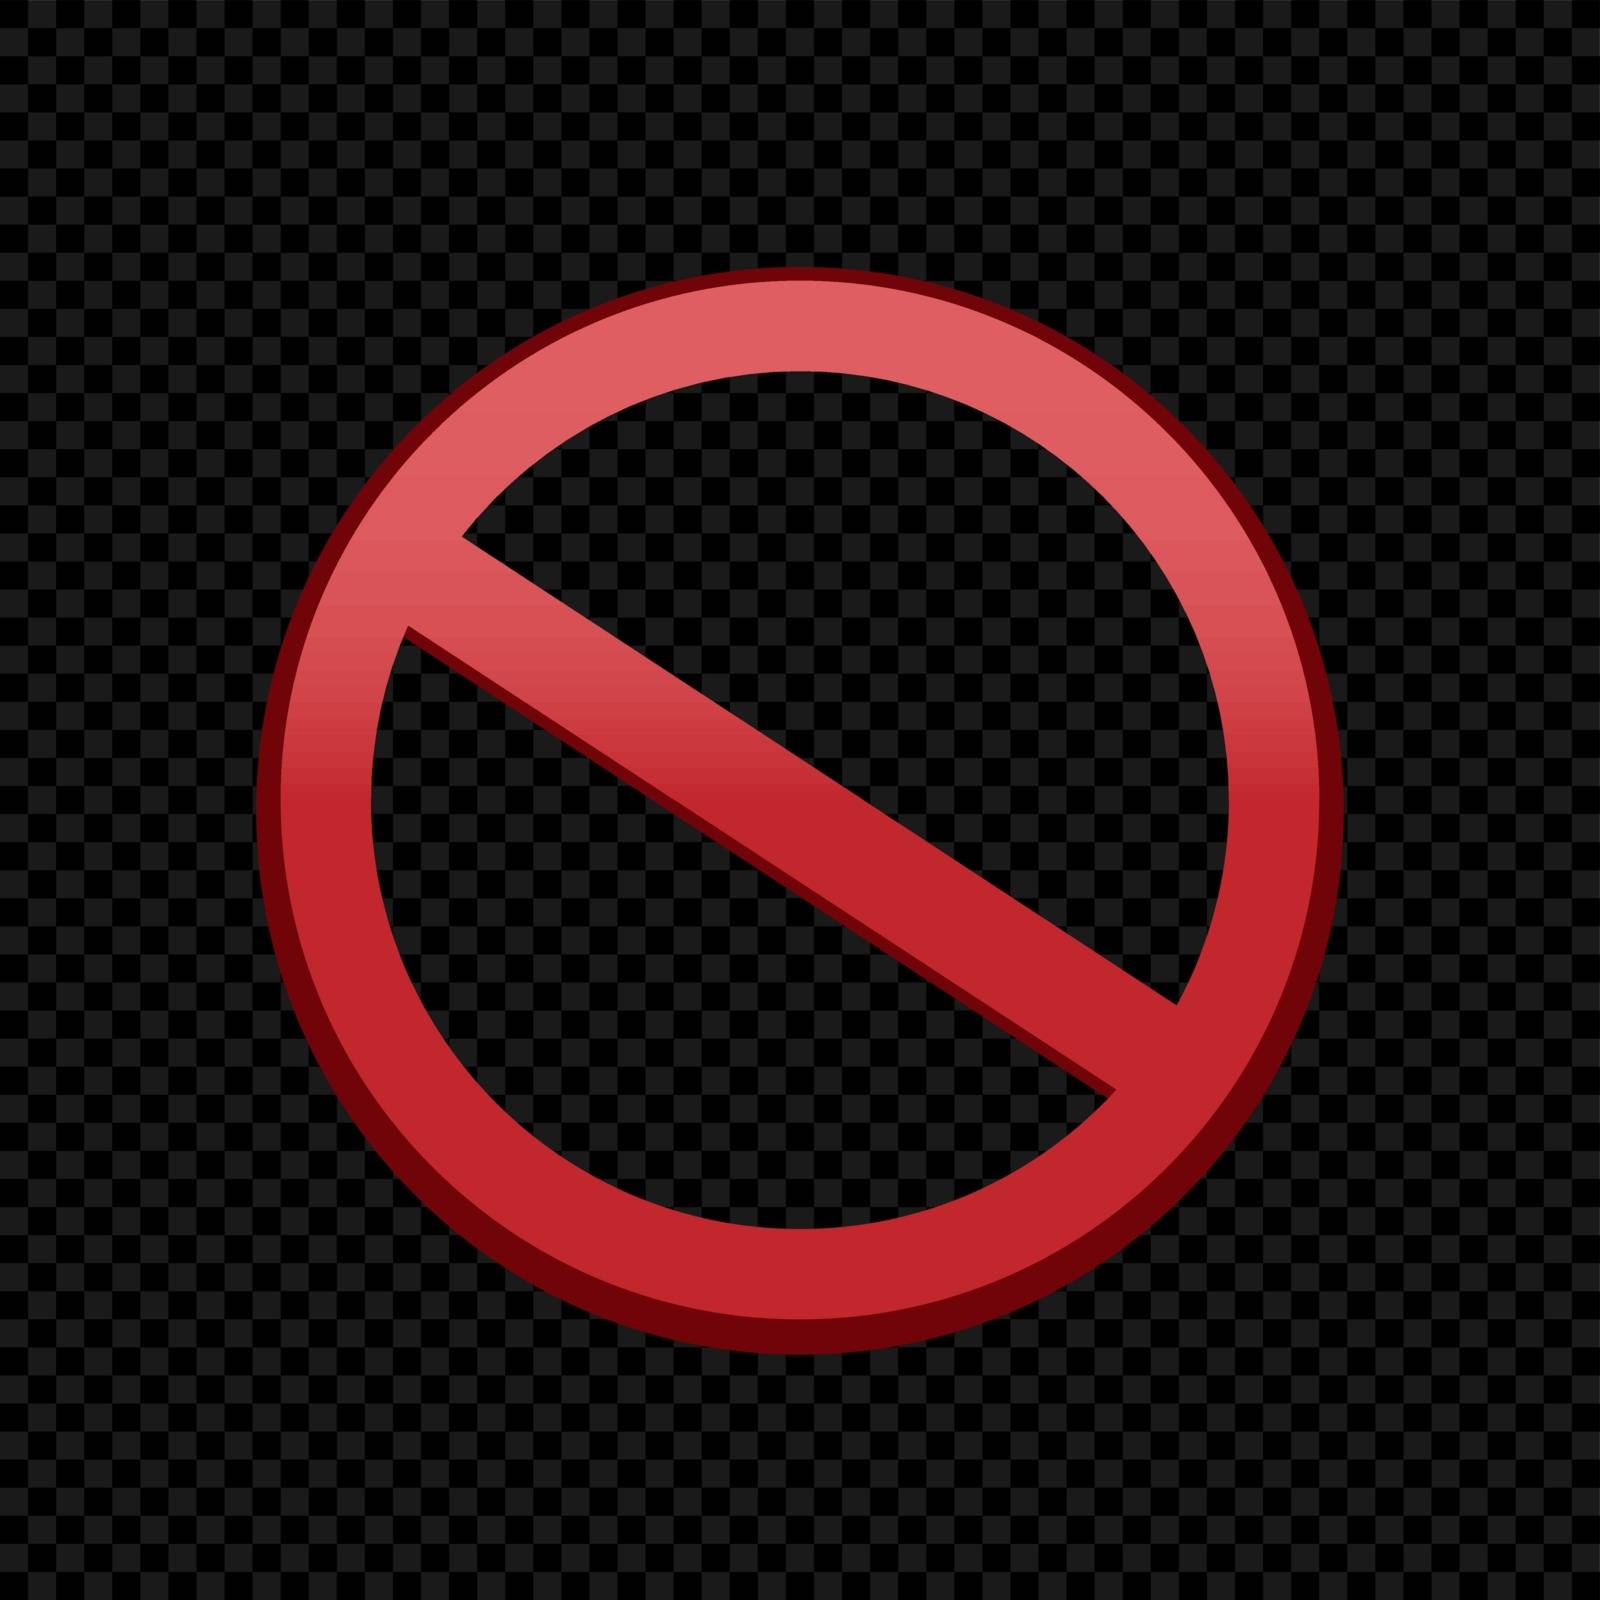 Forbid red symbol template on dark black transparent background. Empty ban sign mockup.